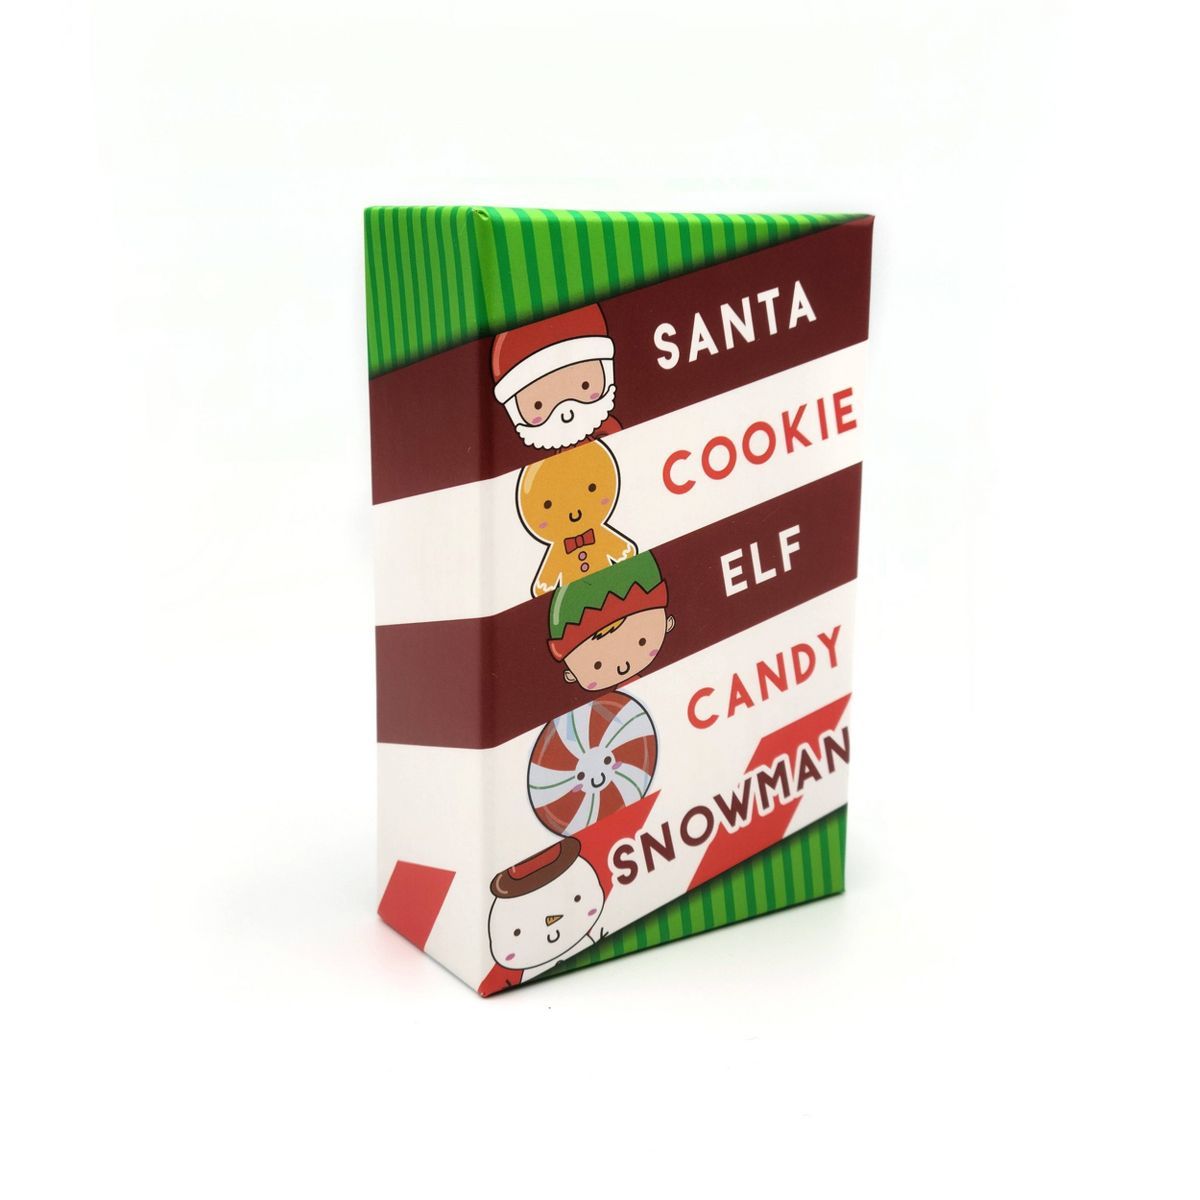 Santa Cookie Elf Candy Snowman Card Game | Target